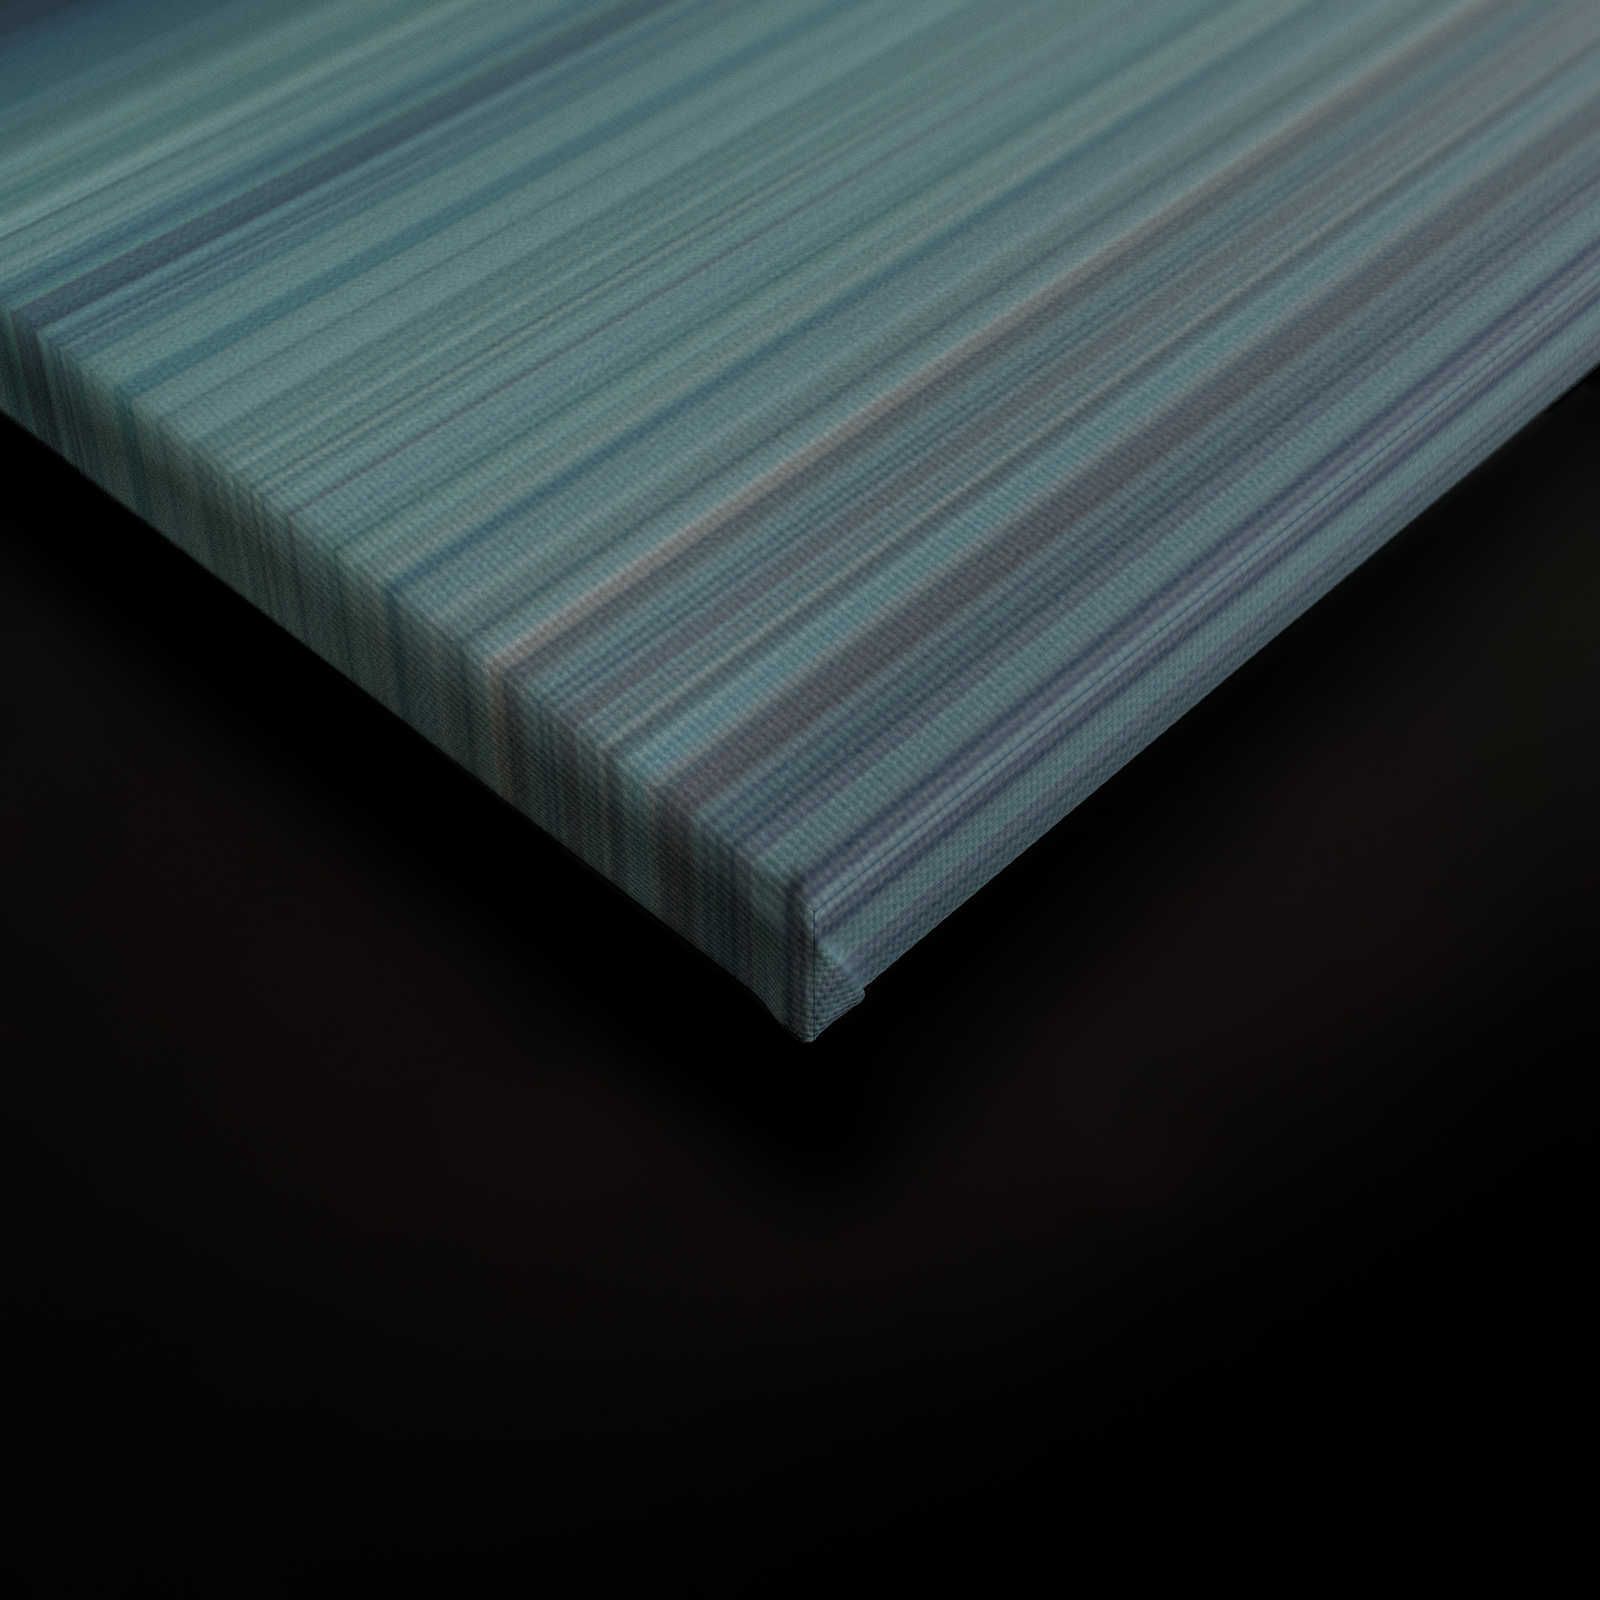             Horizon 1 - Toile paysage abstrait bleu - 0,90 m x 0,60 m
        